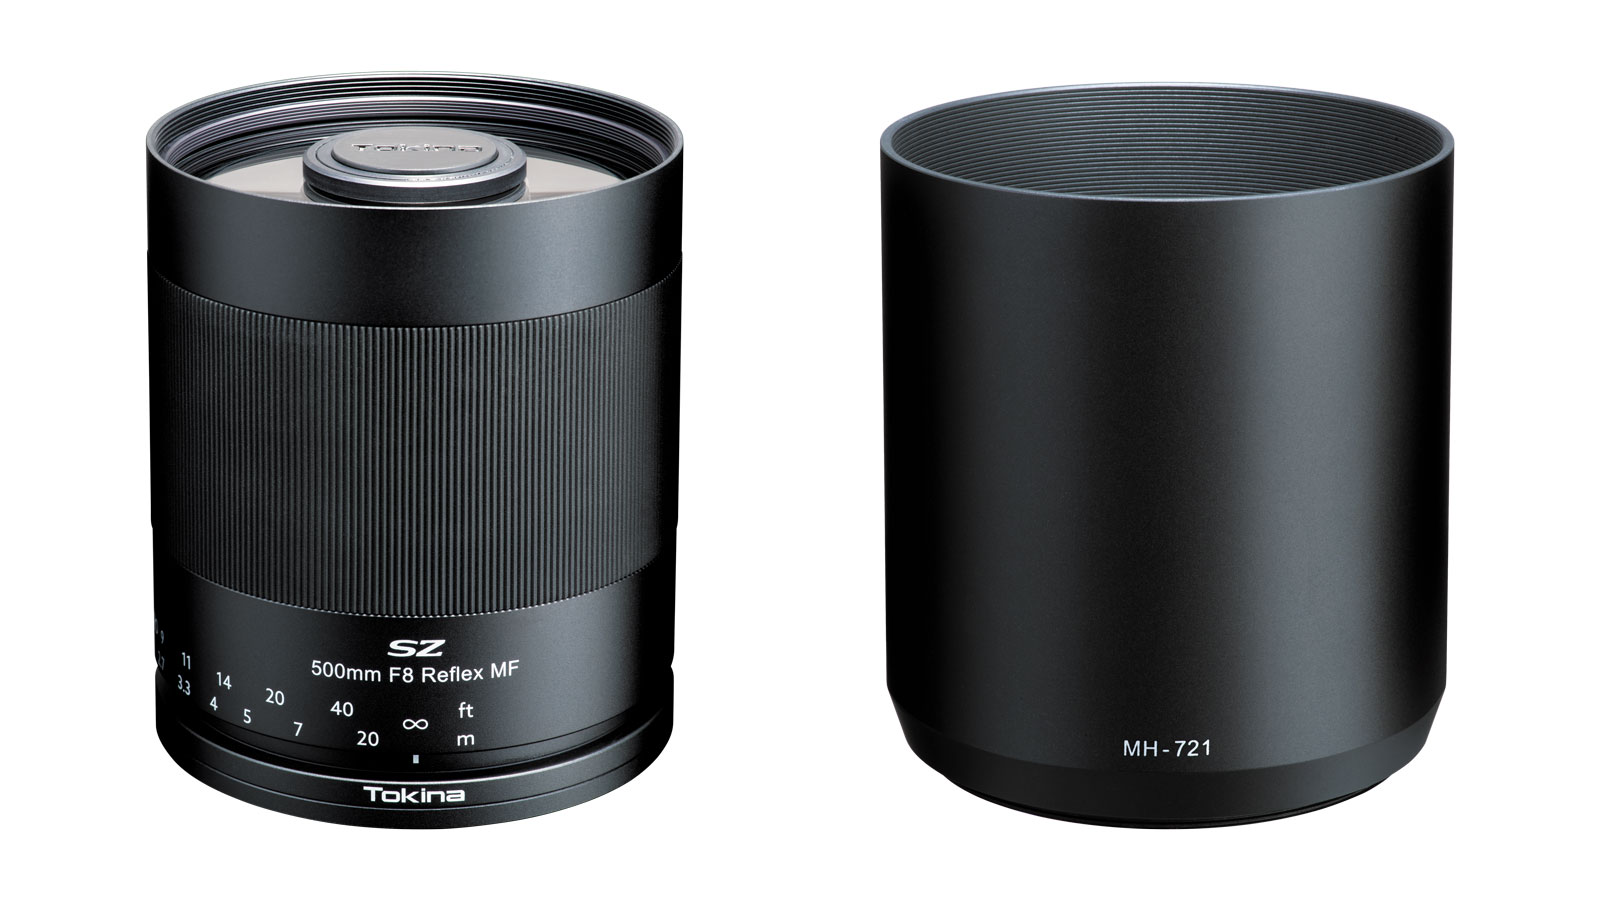 Tokina announced a new SZ 500mm f/8 Reflex MF super-tele lens for